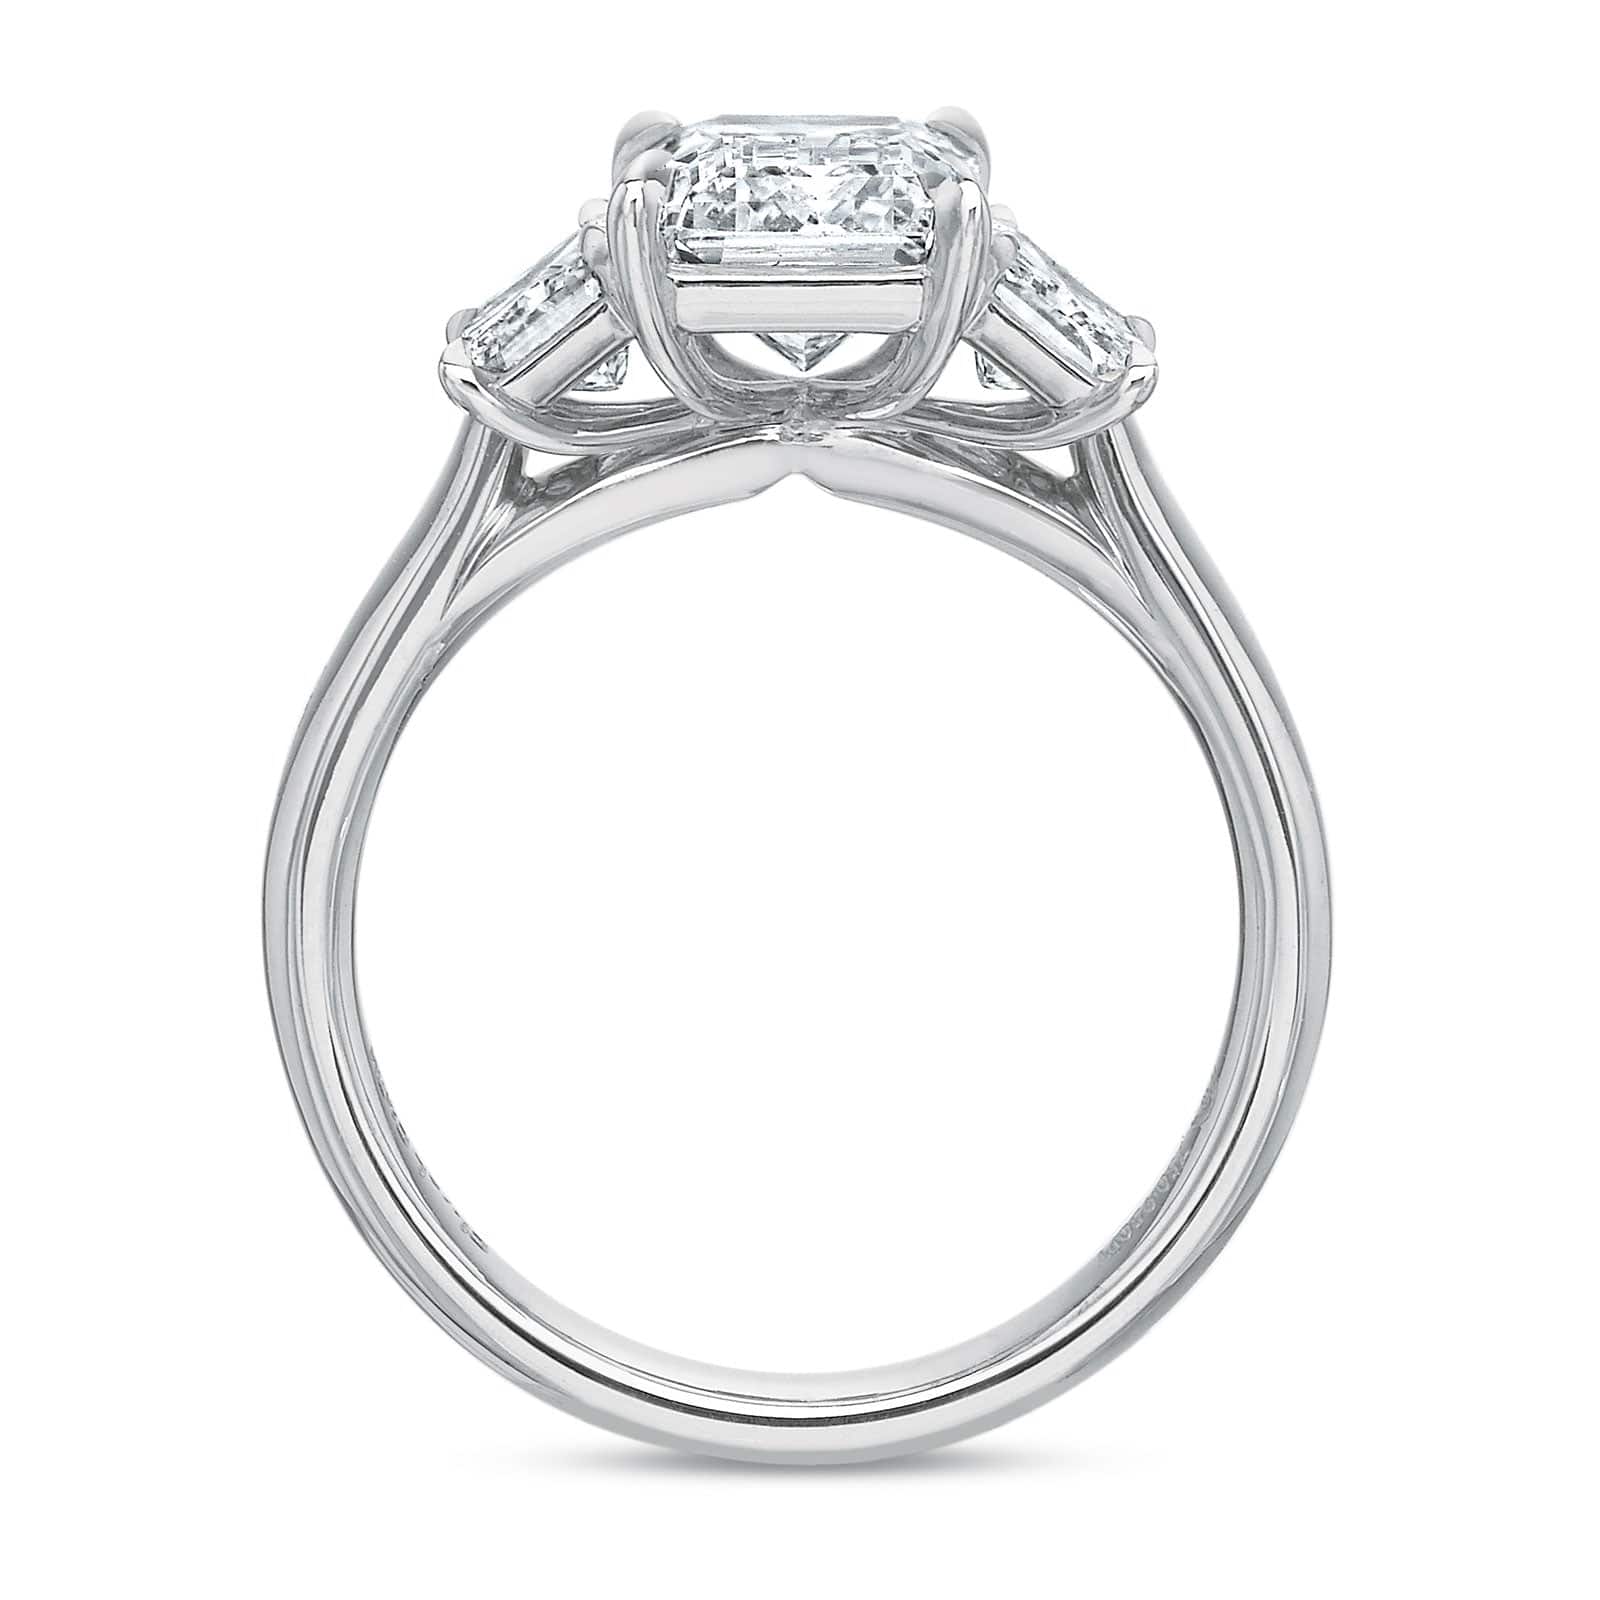 Platinum Emerald Cut Diamond with Emerald Cut Sides Engagement Ring Setting